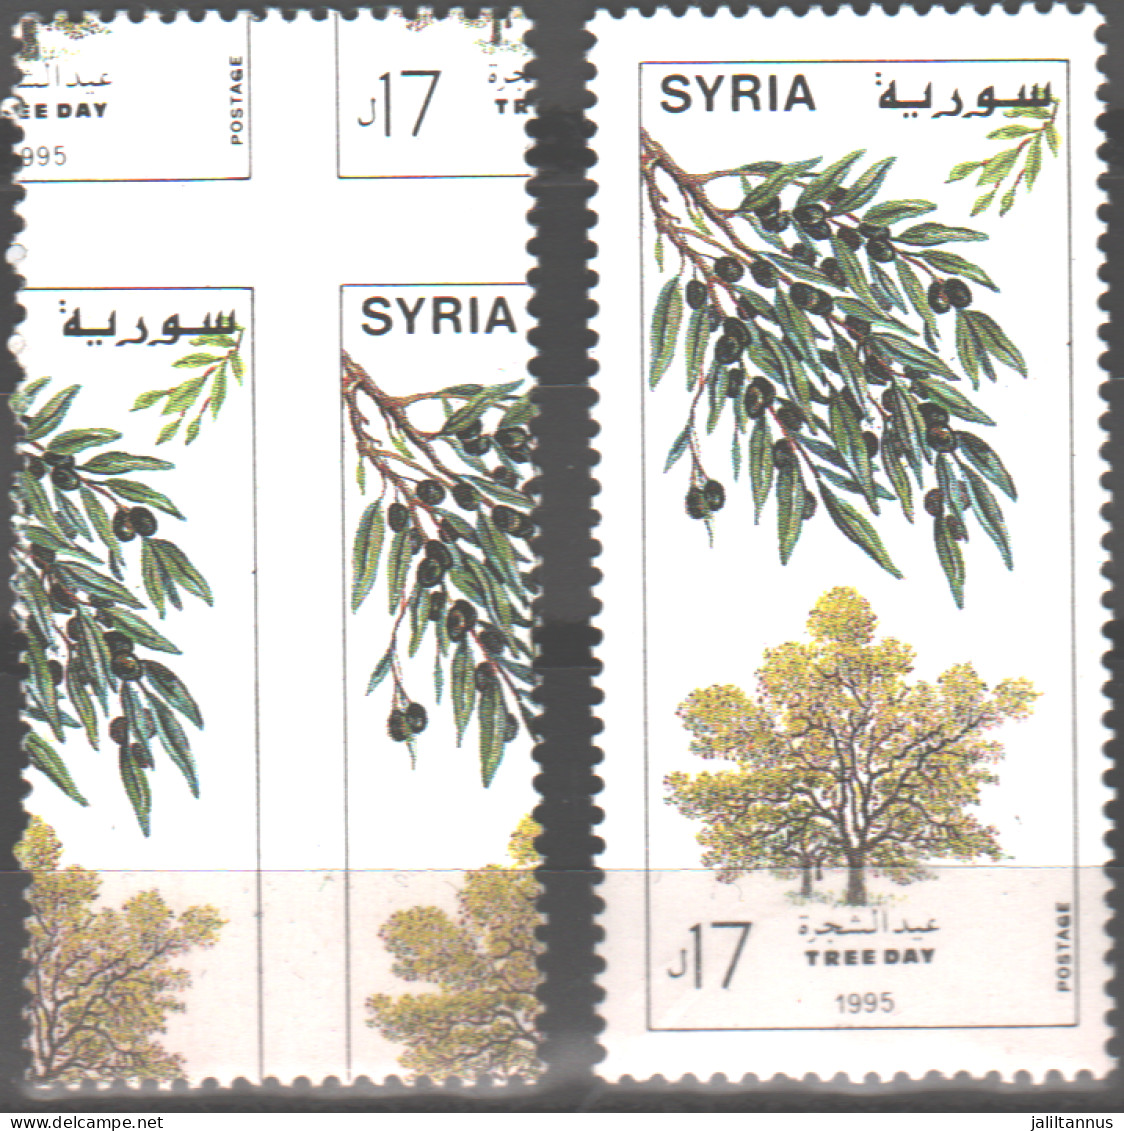 Syria - Perforation Error Set OliveTree 1996 Stamp For Comparison MNH - Syrie